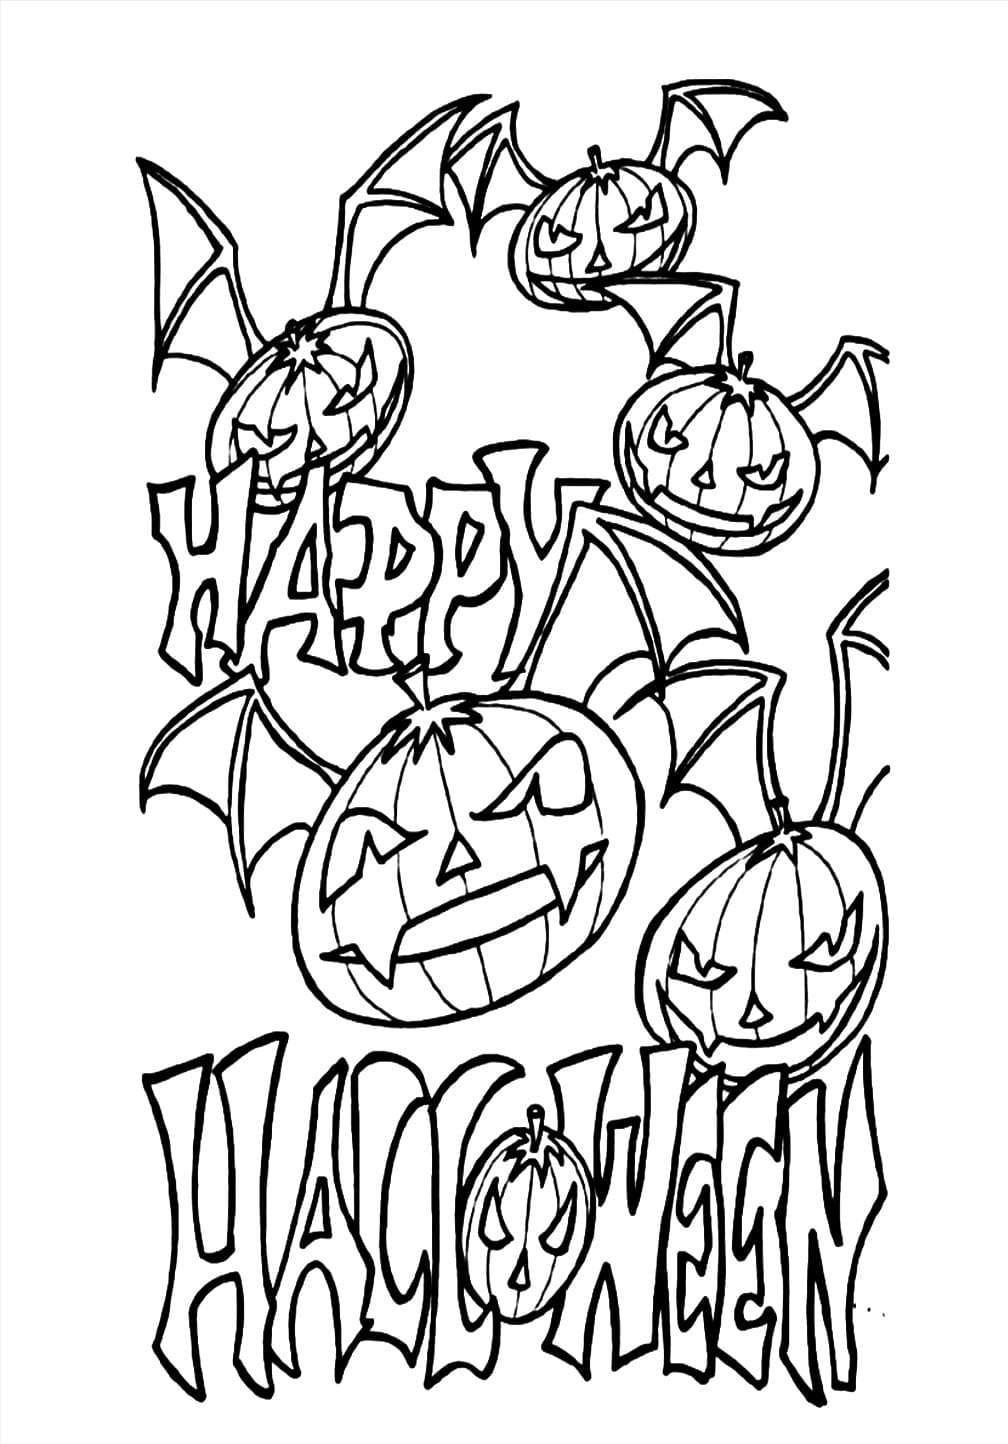 Chauves-souris d’Halloween Imprimables coloring page